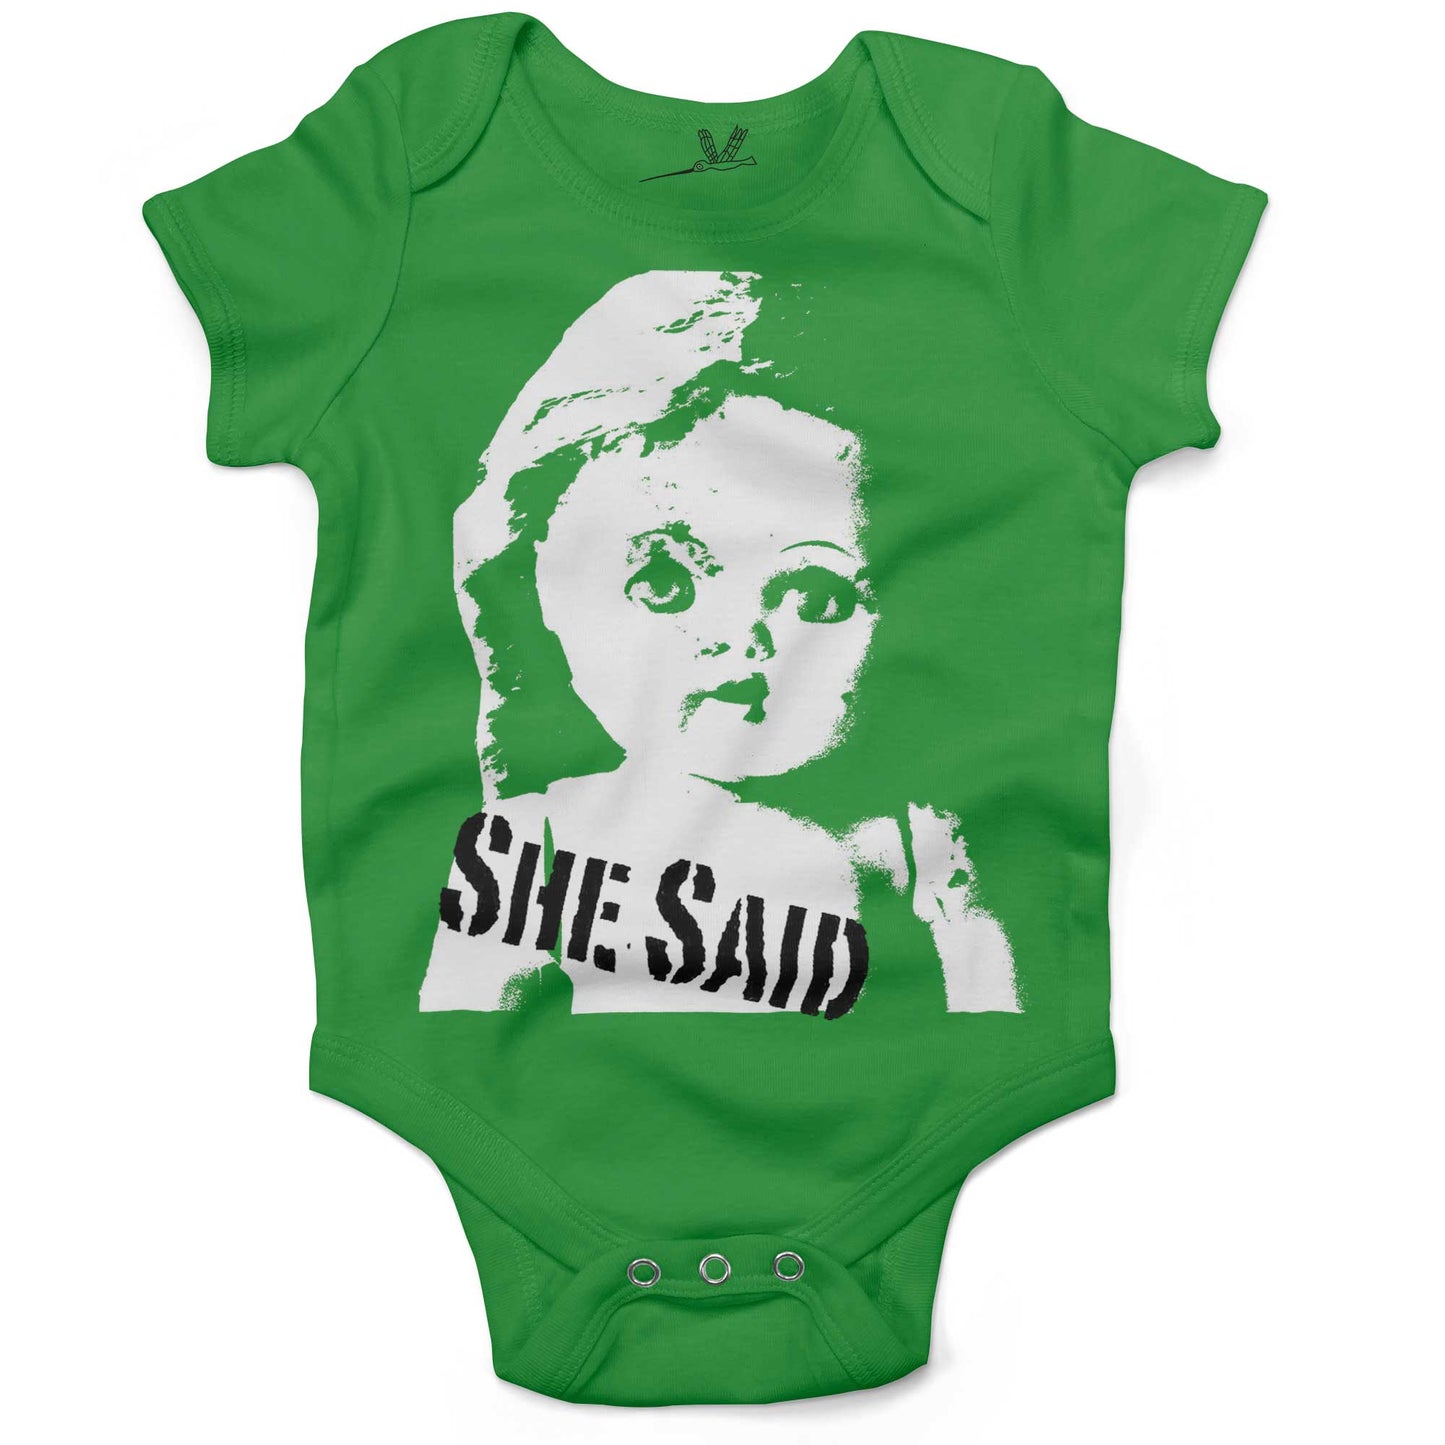 She Said Vintage Doll Head Infant Bodysuit or Raglan Baby Tee-Grass Green-3-6 months